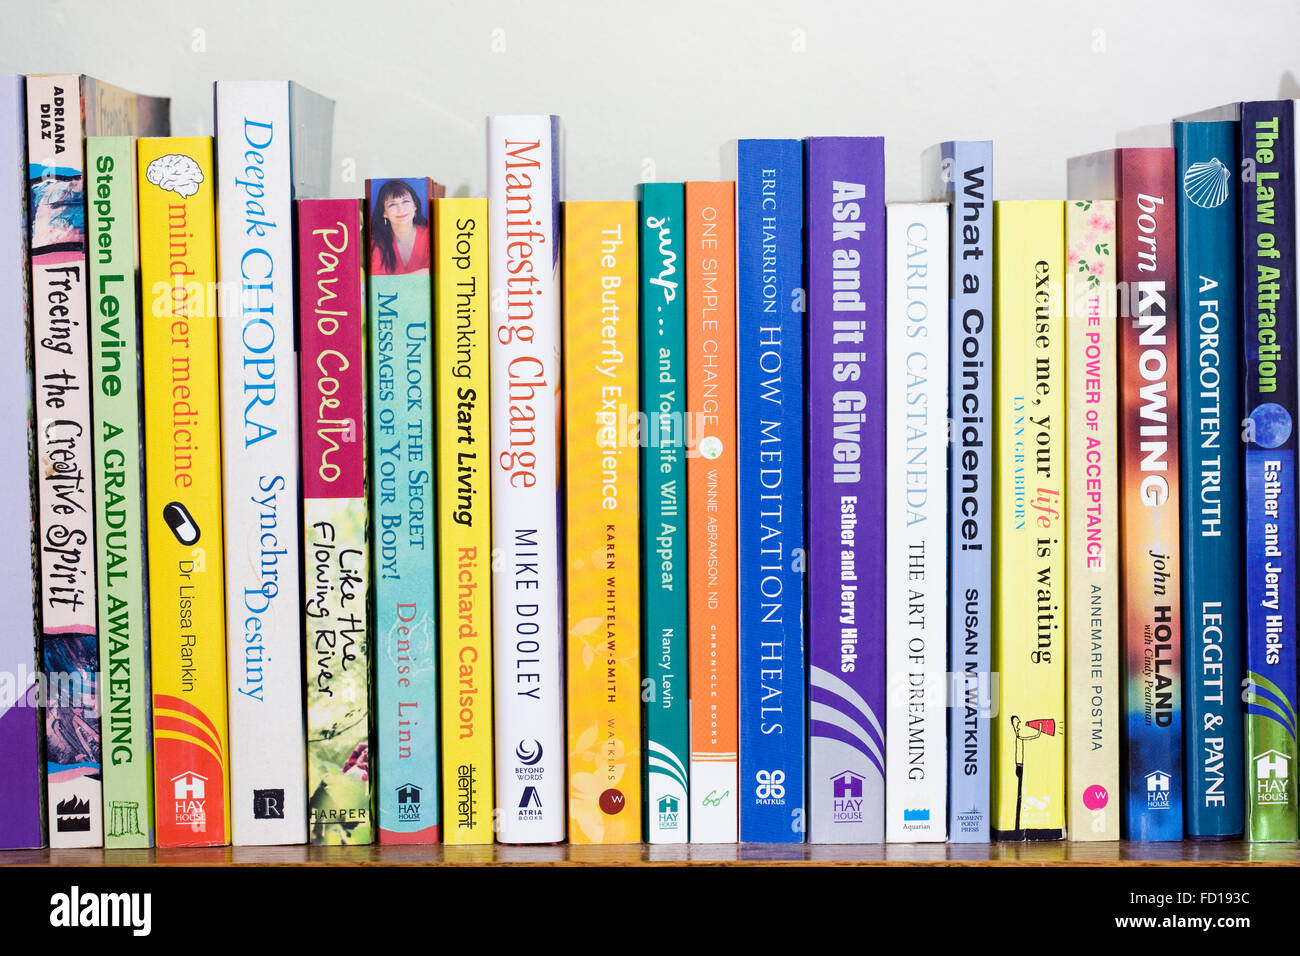 Self help books on a bookshelf. Stock Photo